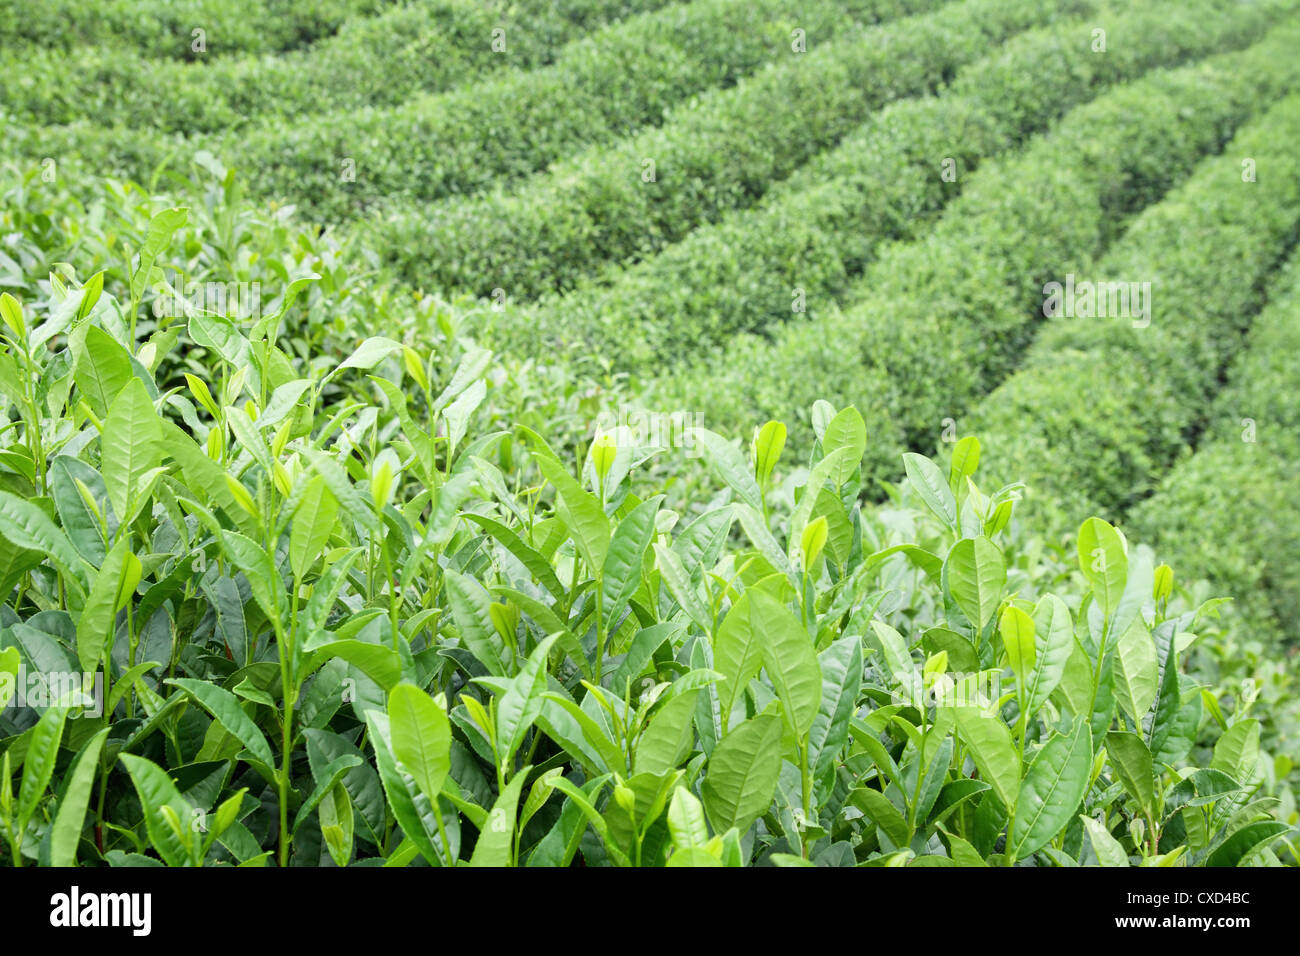 Green Tea Plantation Foto Stock